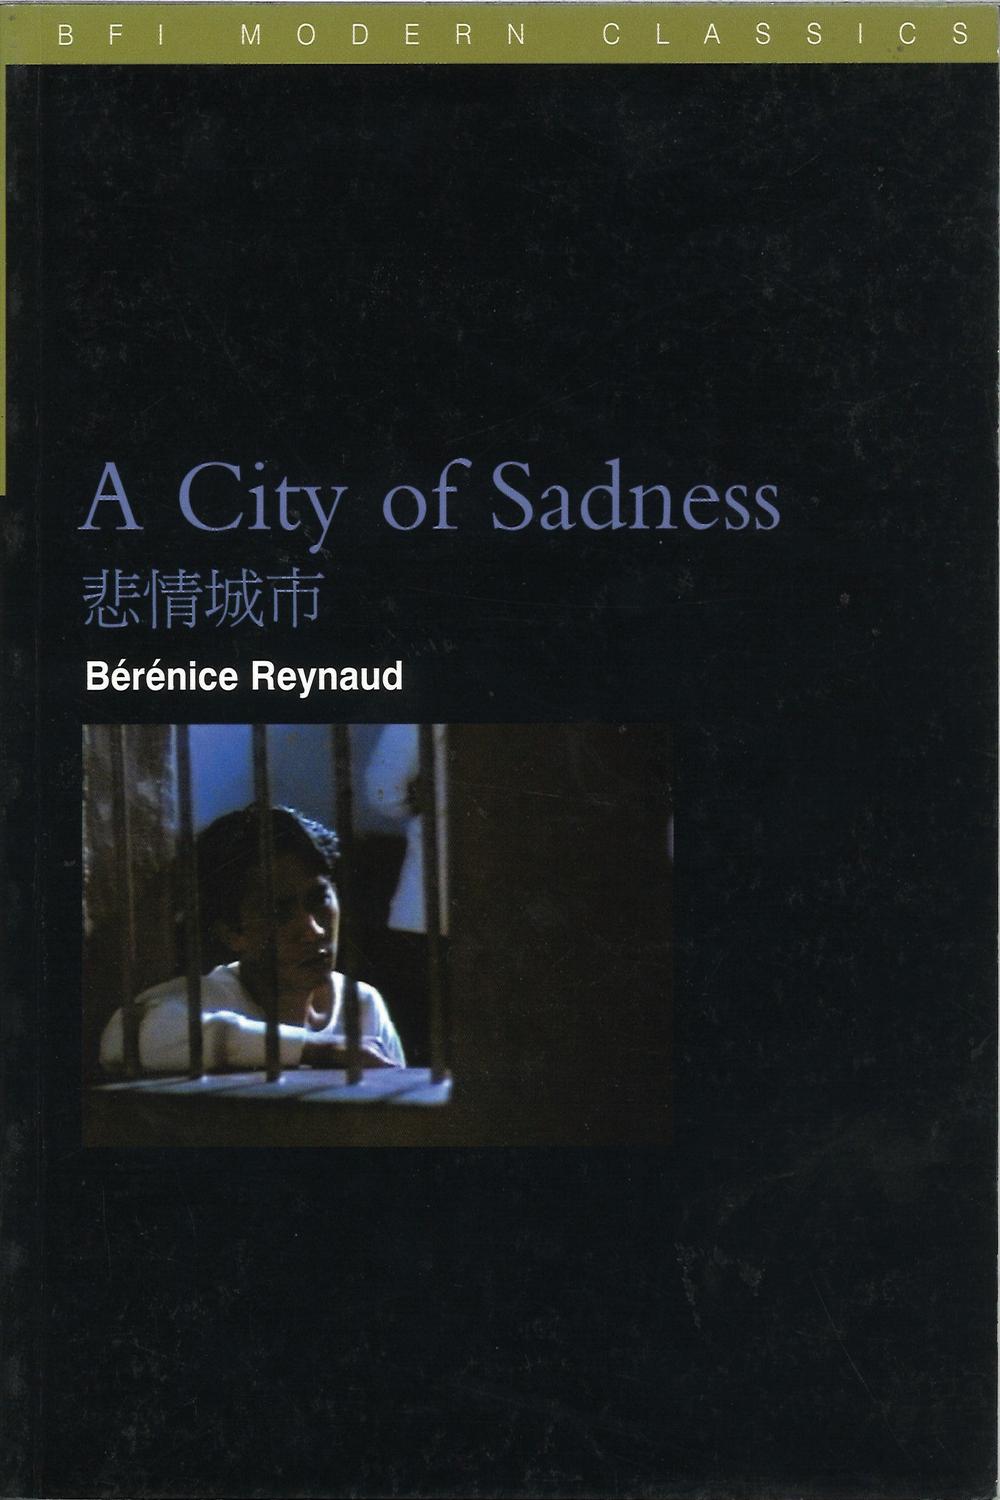 A City of Sadness - Berenice Reynaud